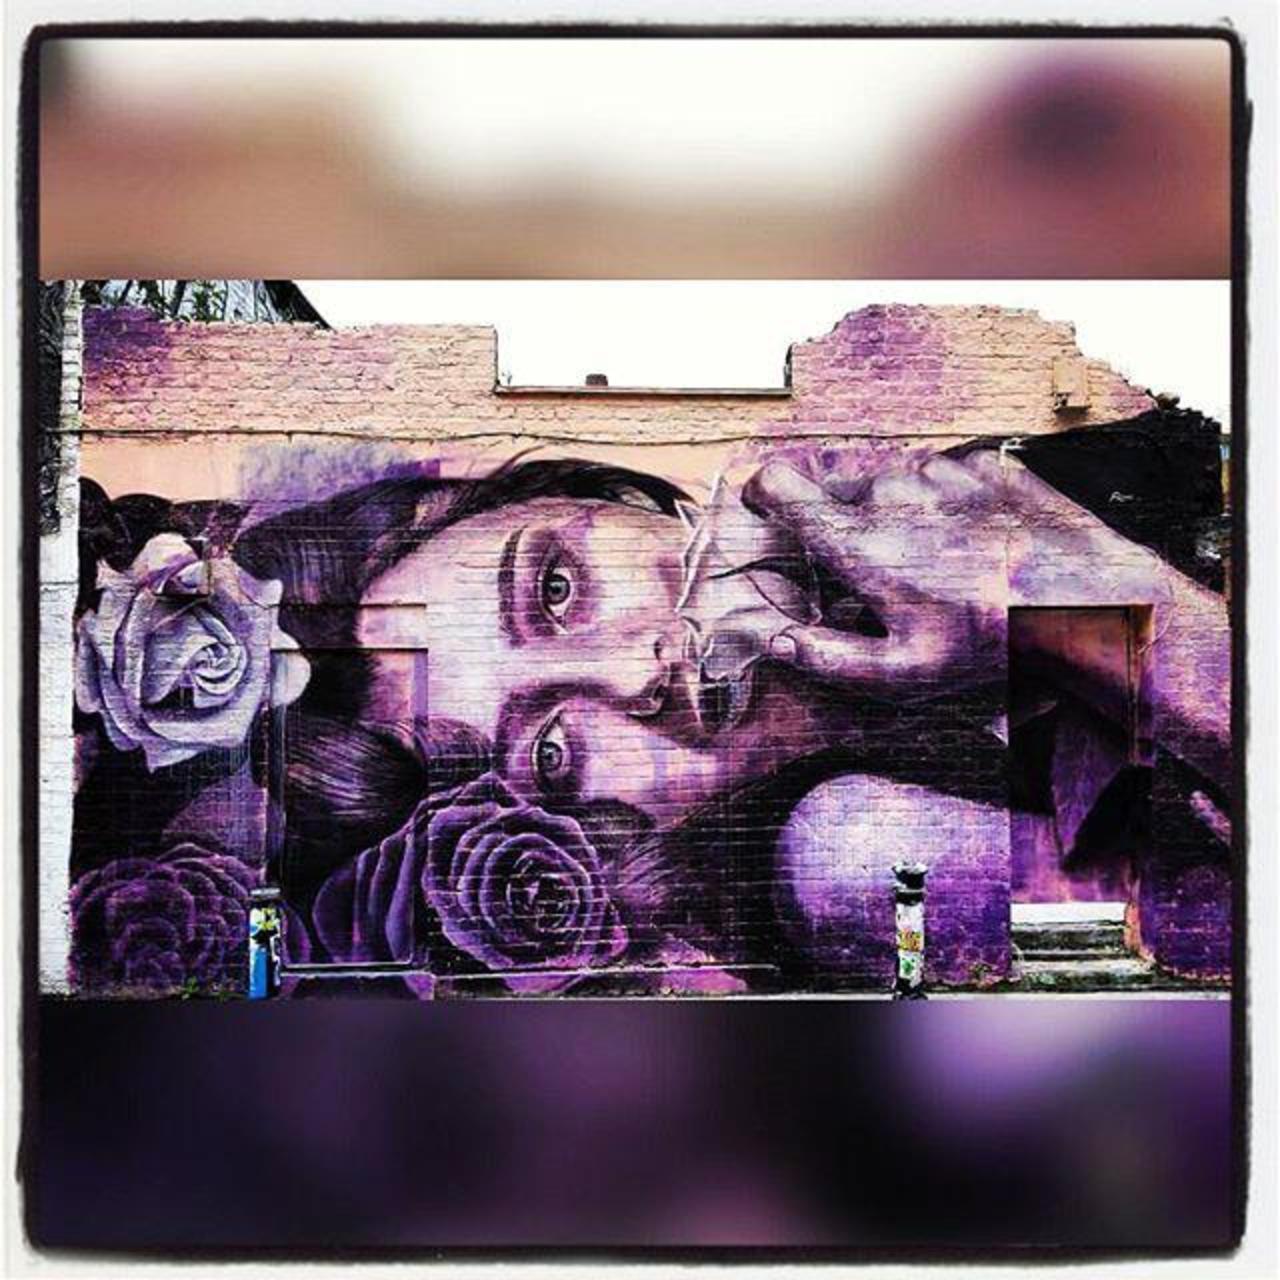 RT @weigeltw: #streetart #london #rone #girl #purple #rose #england #londonstreetart #street #art #streetartlondon #graffiti http://t.co/G26cNg2KxE